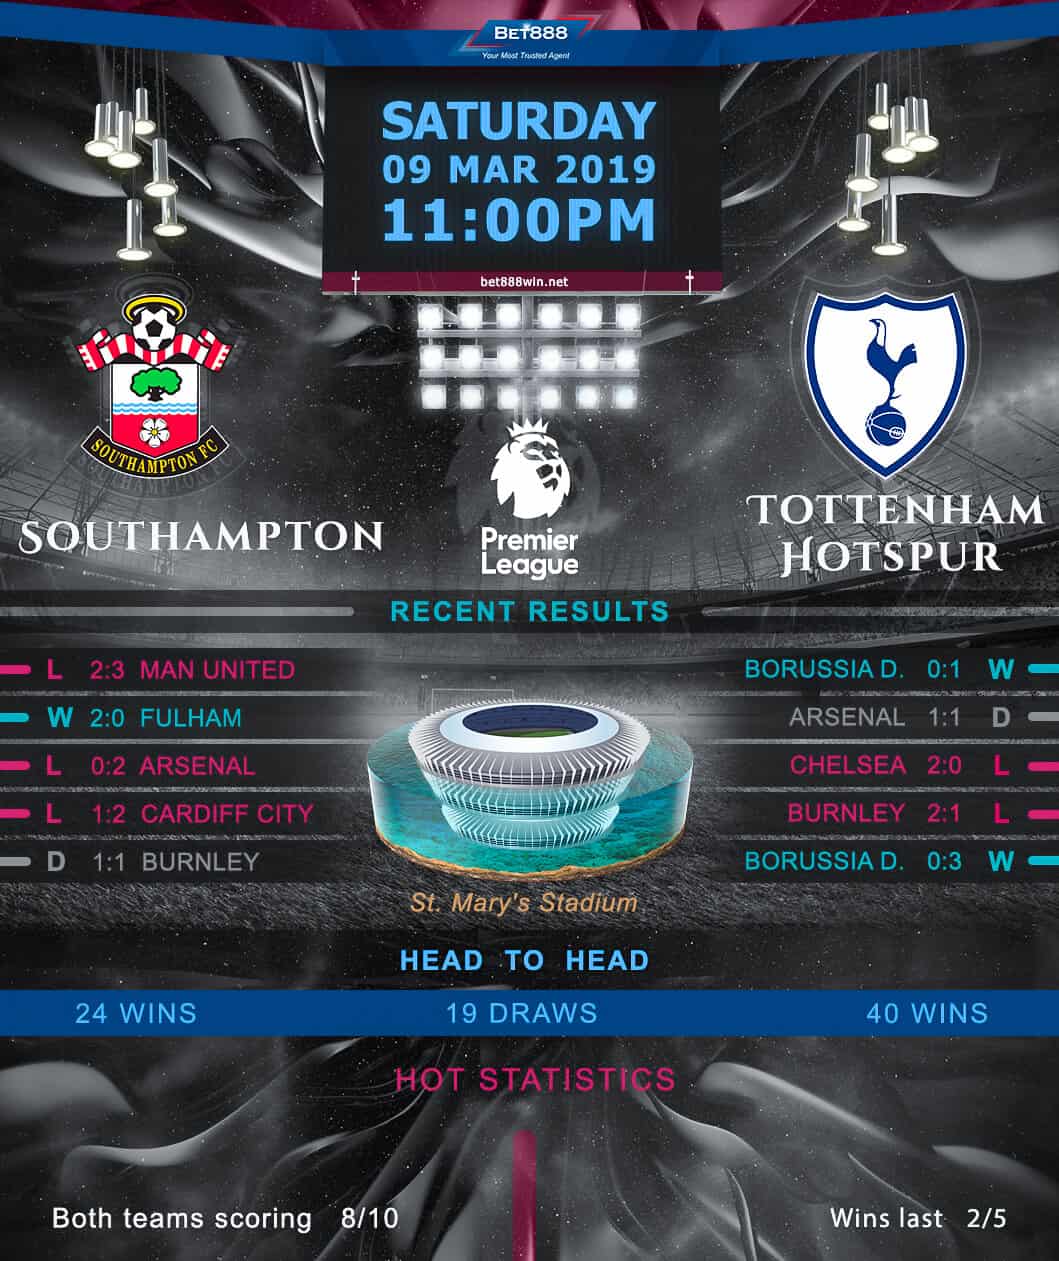 Southampton vs Tottenham Hotspur 09/03/19